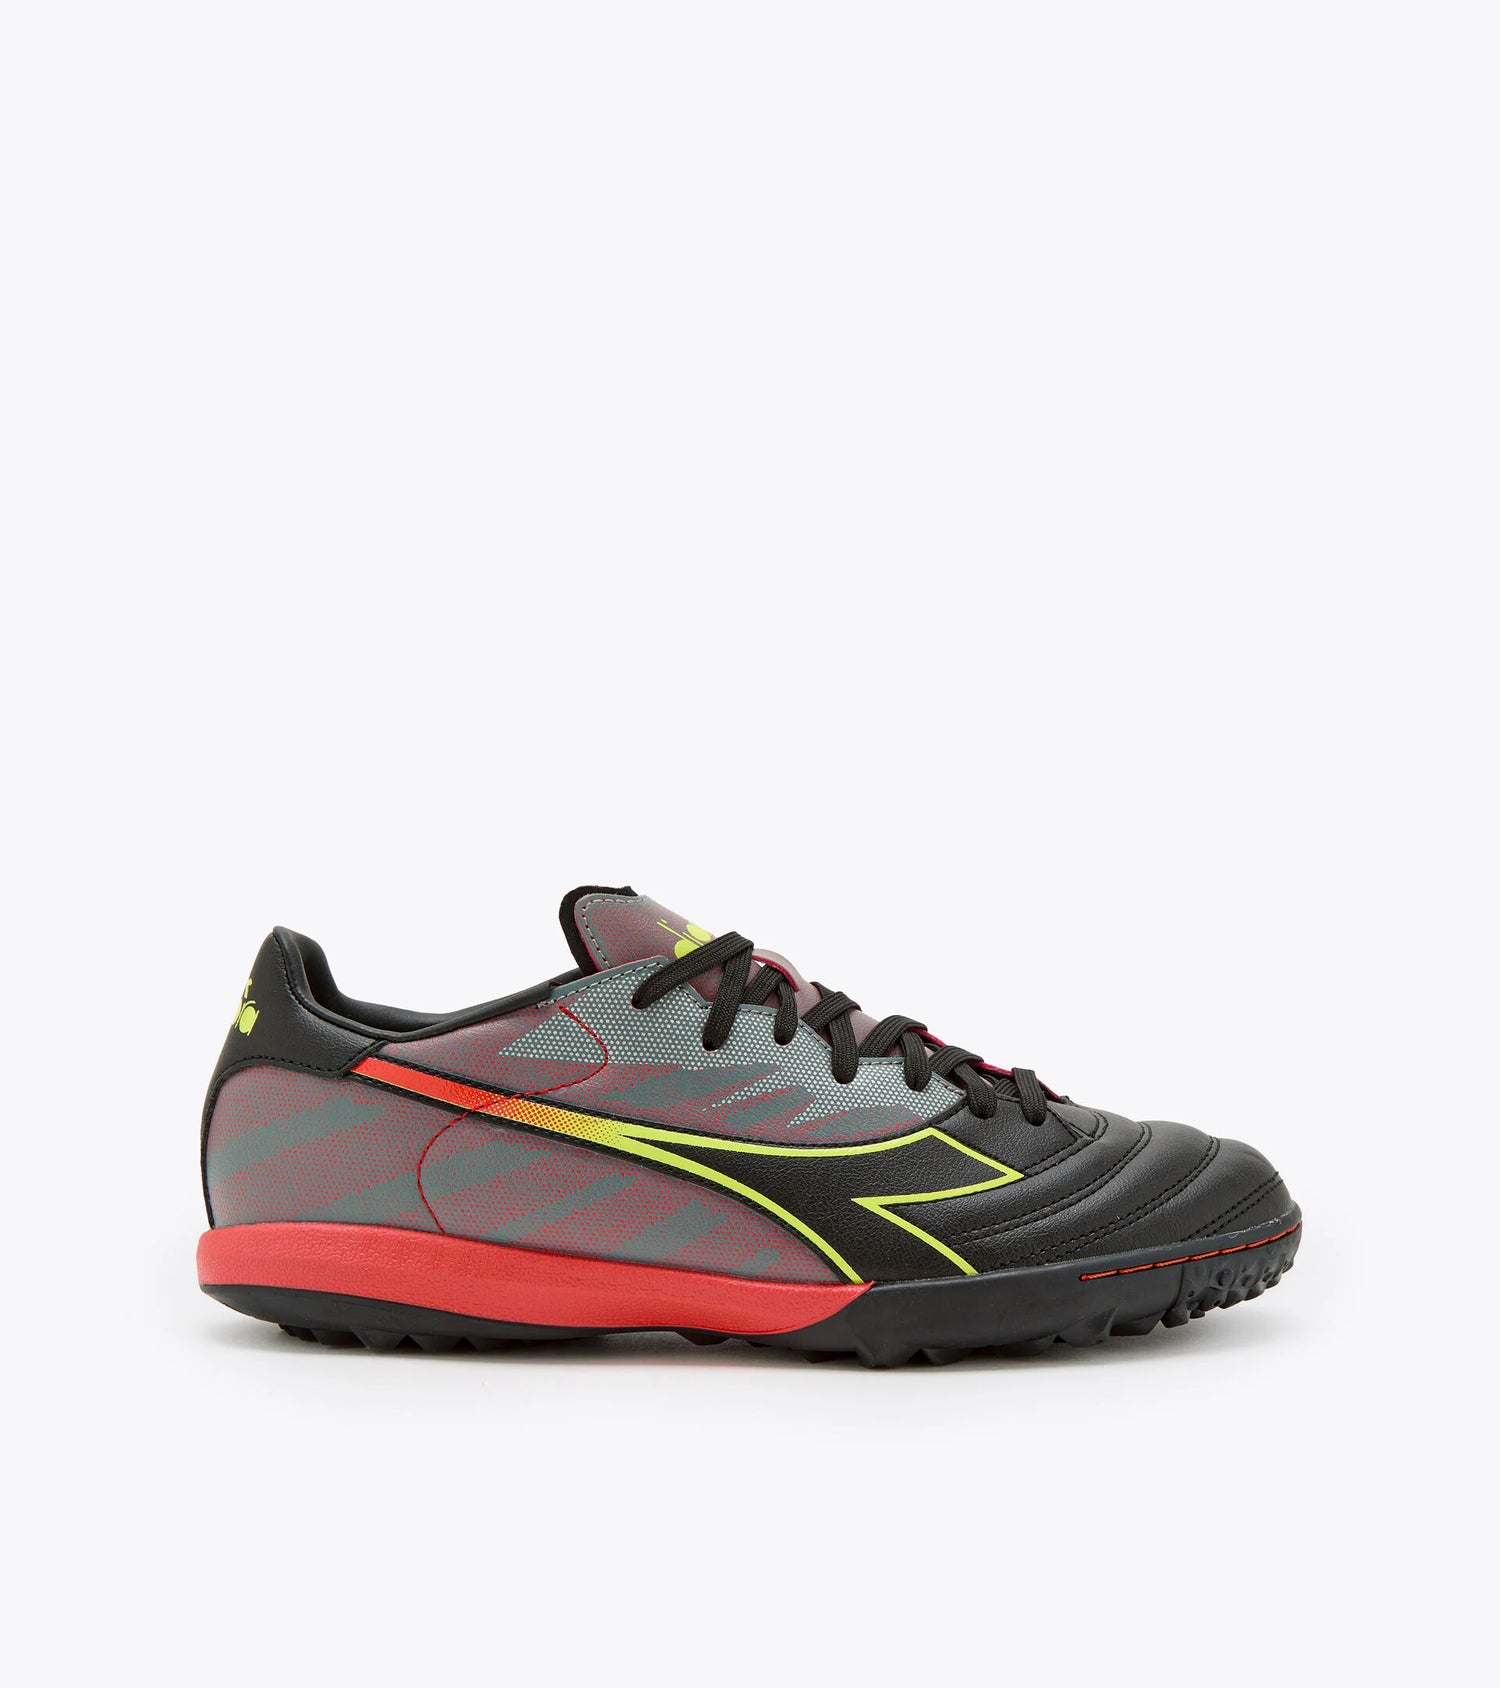 Diadora Brasil Elite Veloce R TFR Turf Soccer Shoe - Black/Fluo Yellow/Milano Red